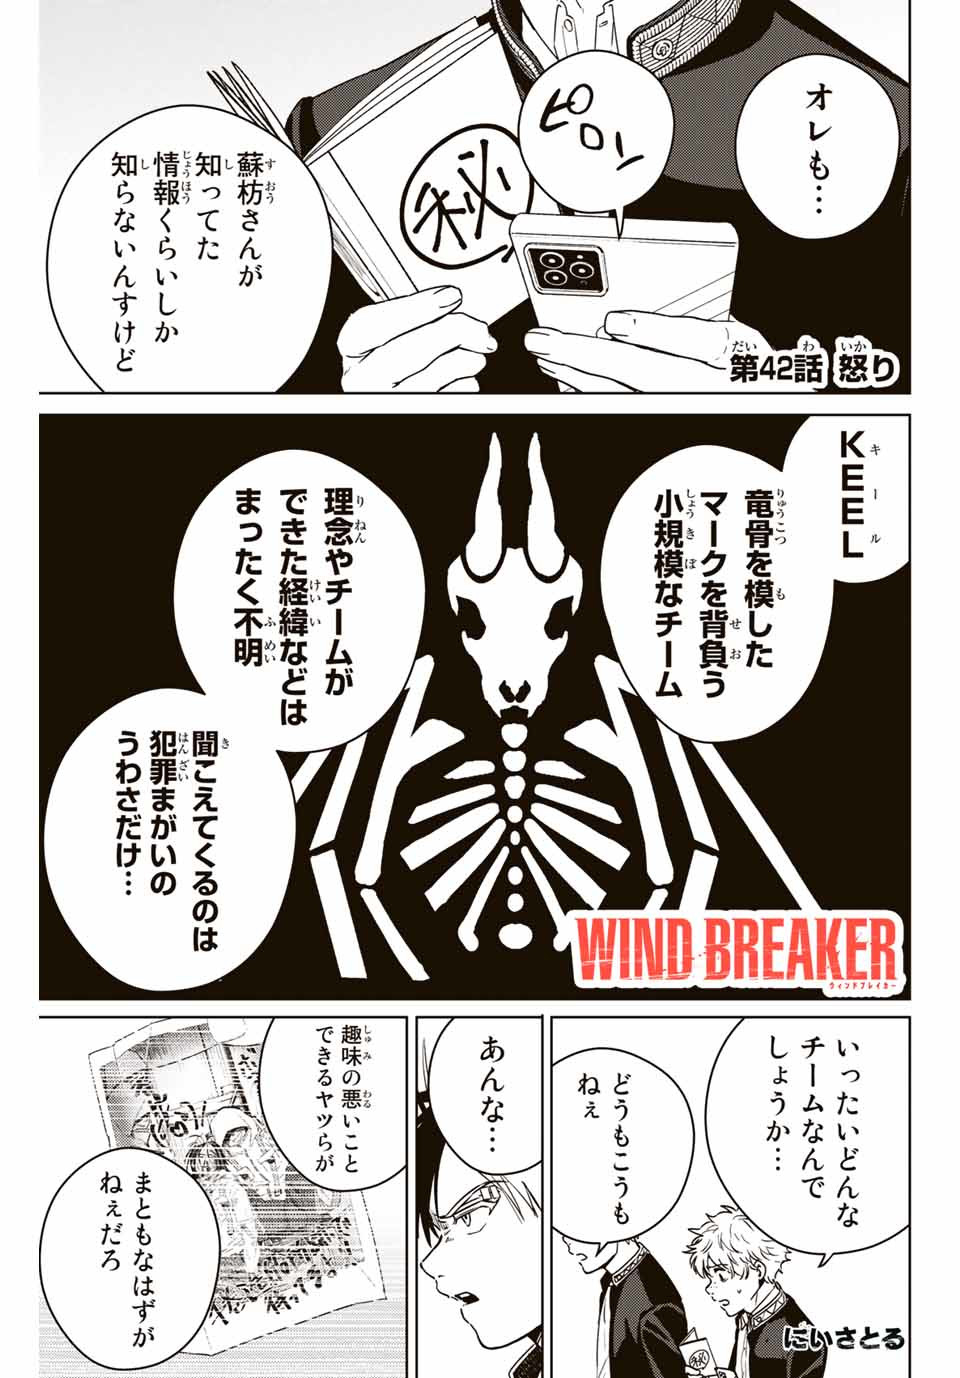 Windbreaker ウィンドブレイカー Wind Breaker (NII Satoru) 第42話 - Page 1